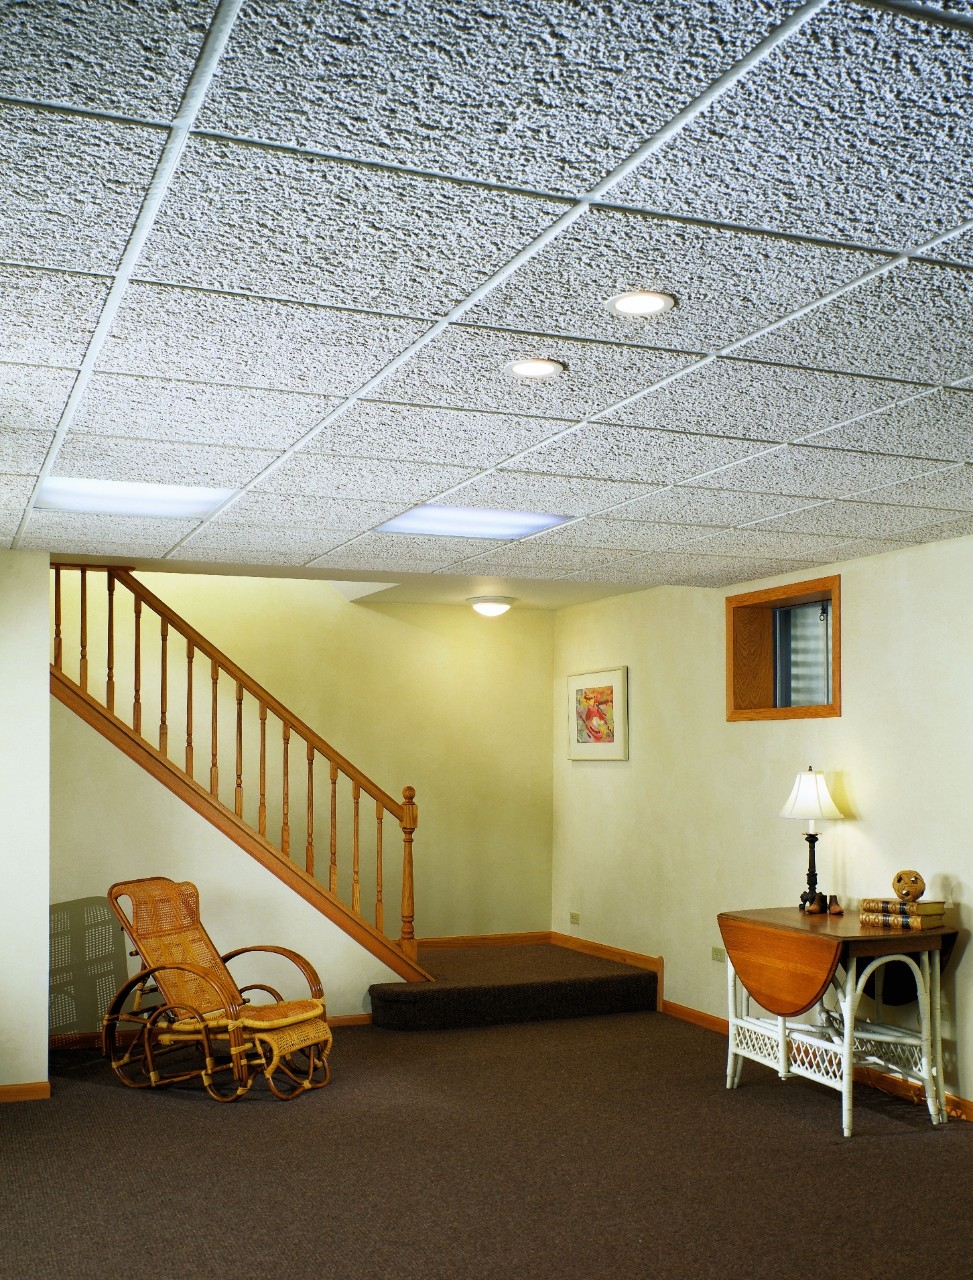 Cgc Ceiling Tile Catalogue Cgc Ceiling Tile Catalogue cgc cheyenne acoustical ceiling panels 973 X 1280